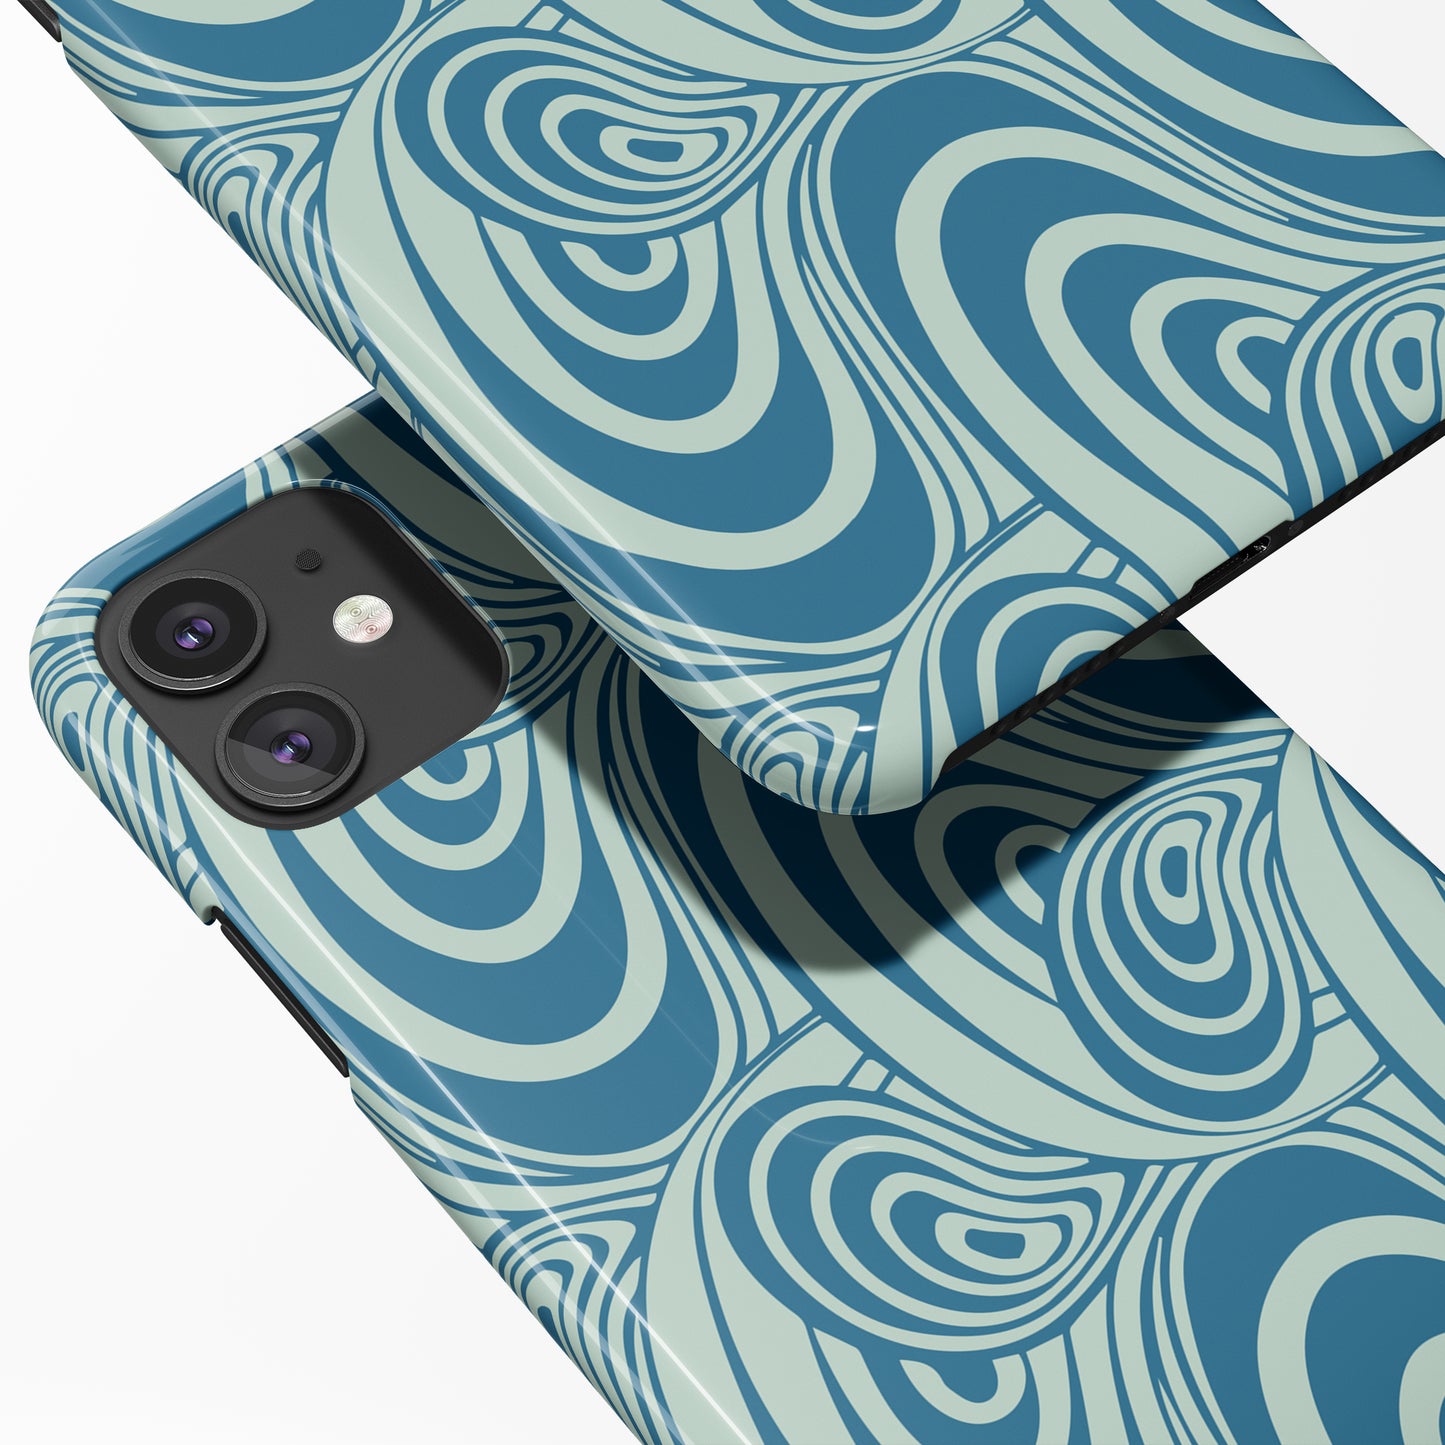 Blue Lagoon iPhone Case